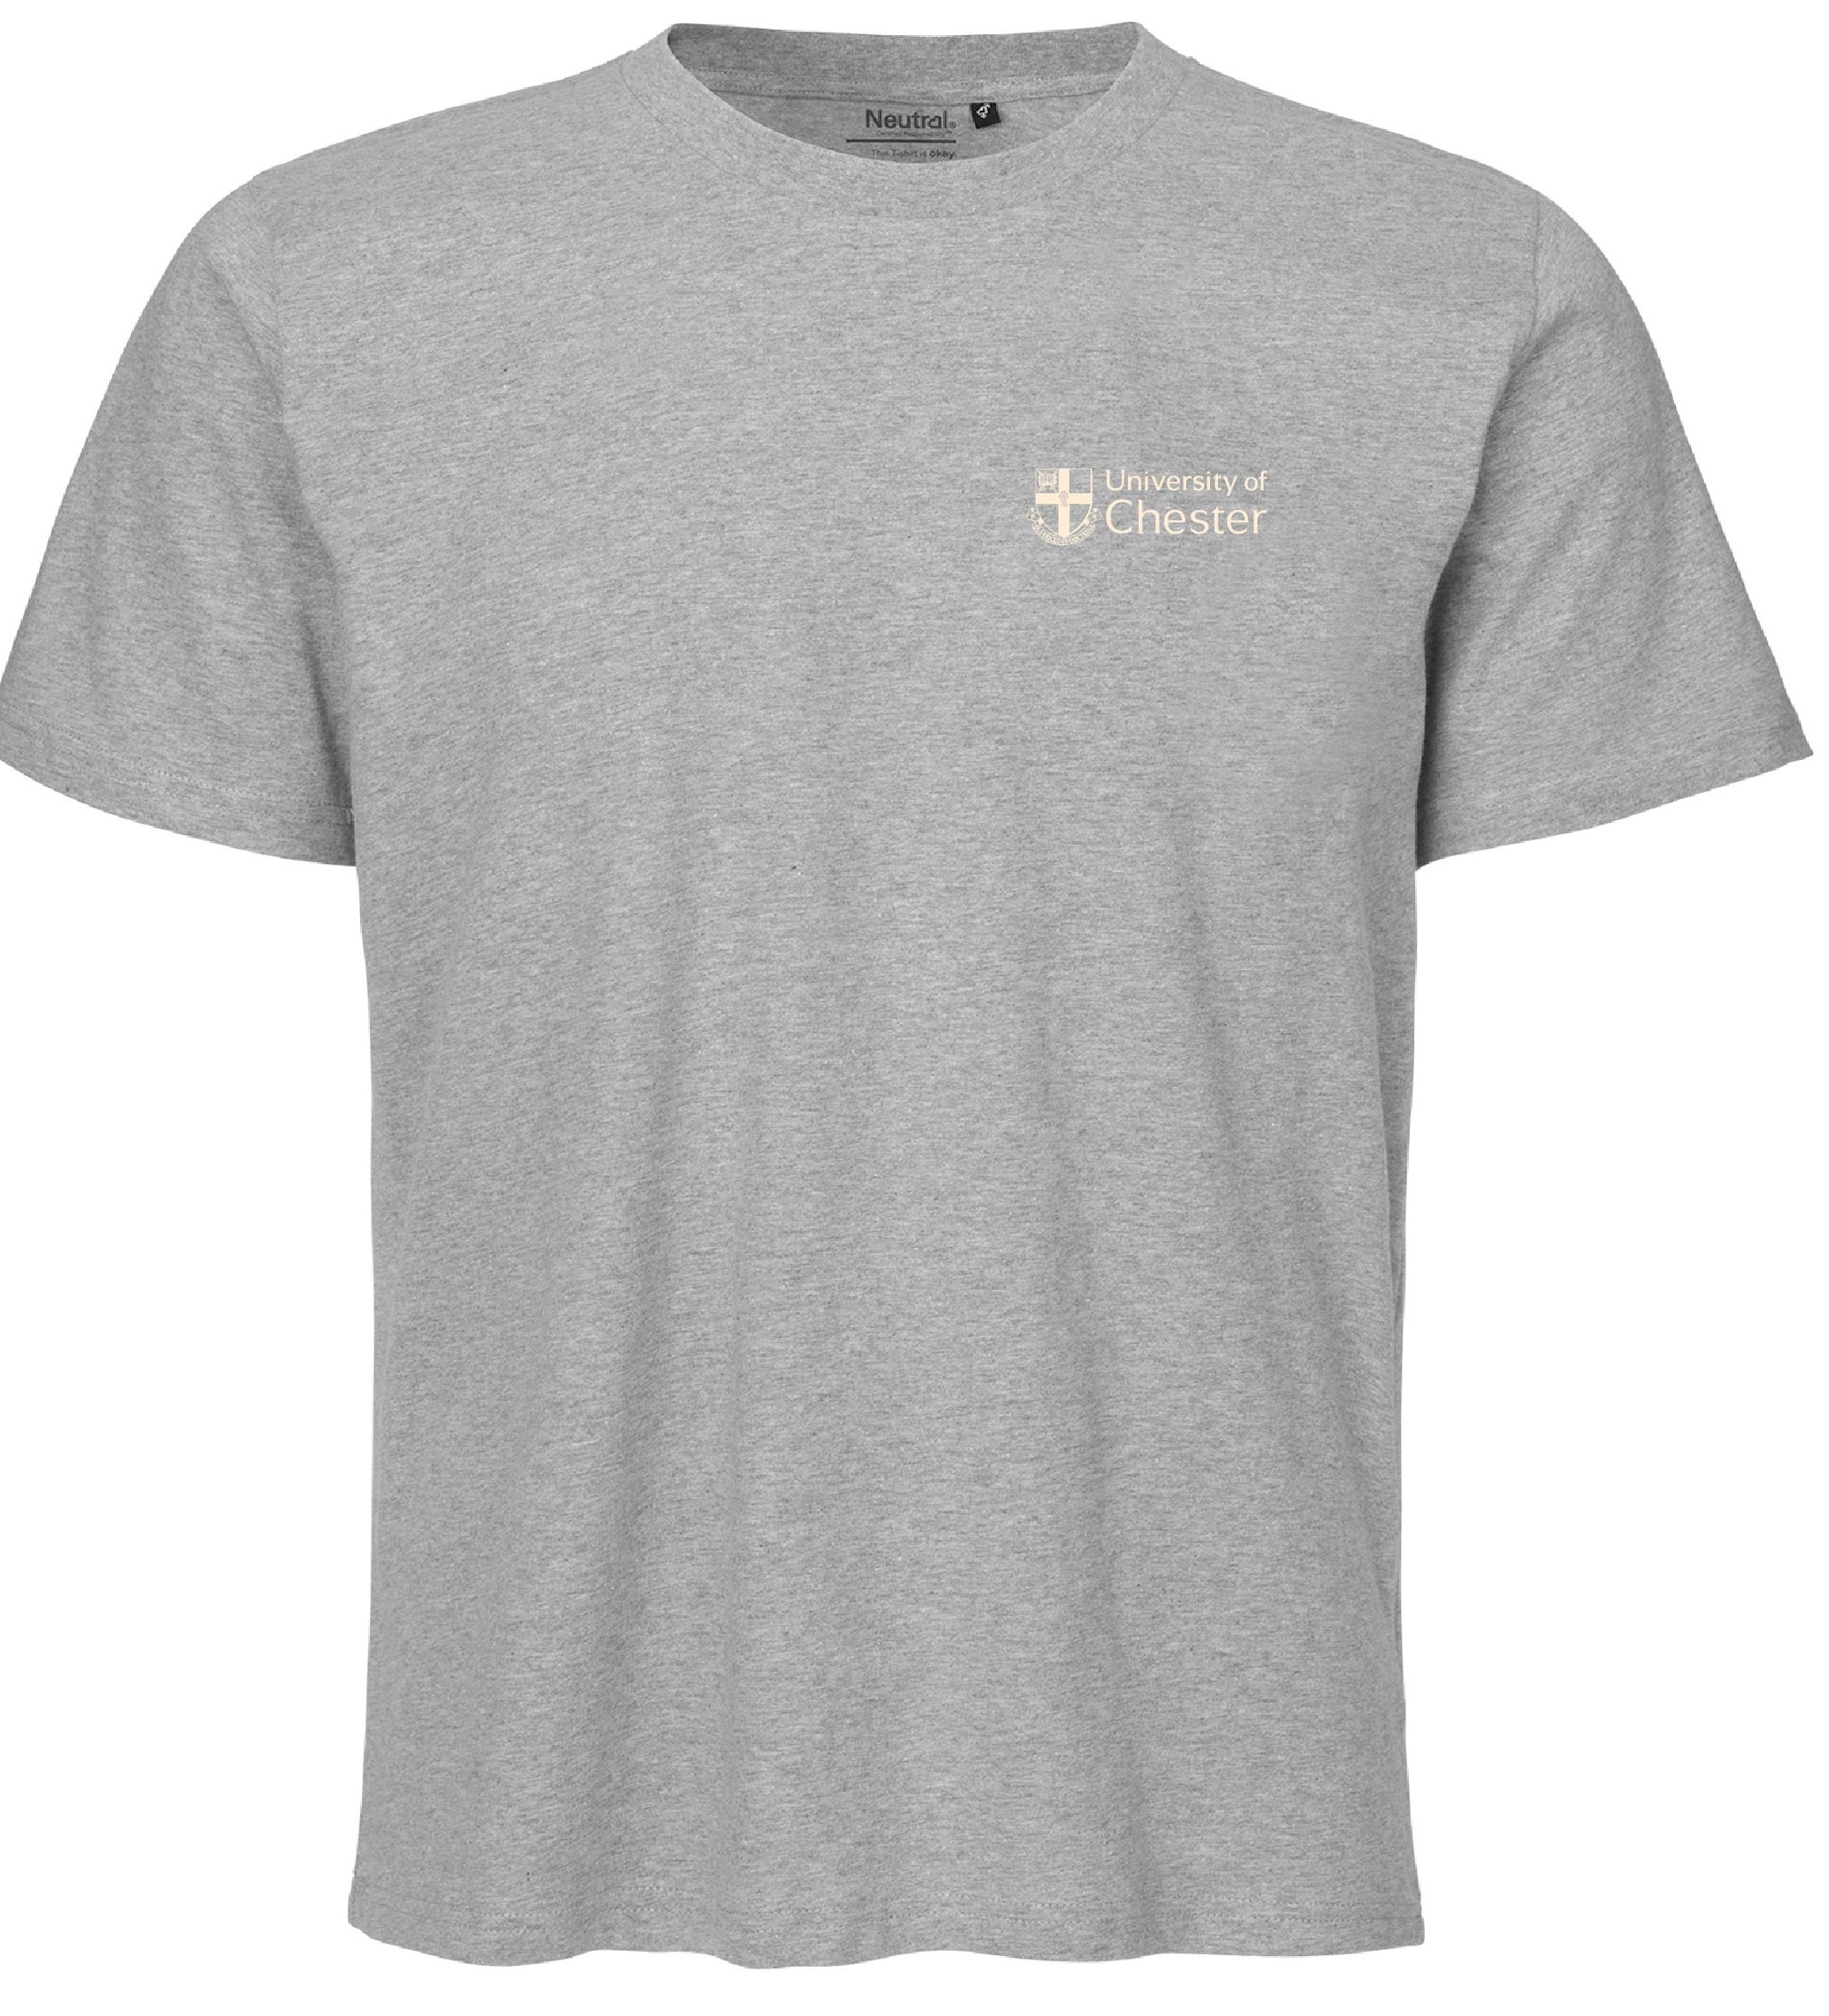 Neutral range - UoC T-Shirt - Grey - XL